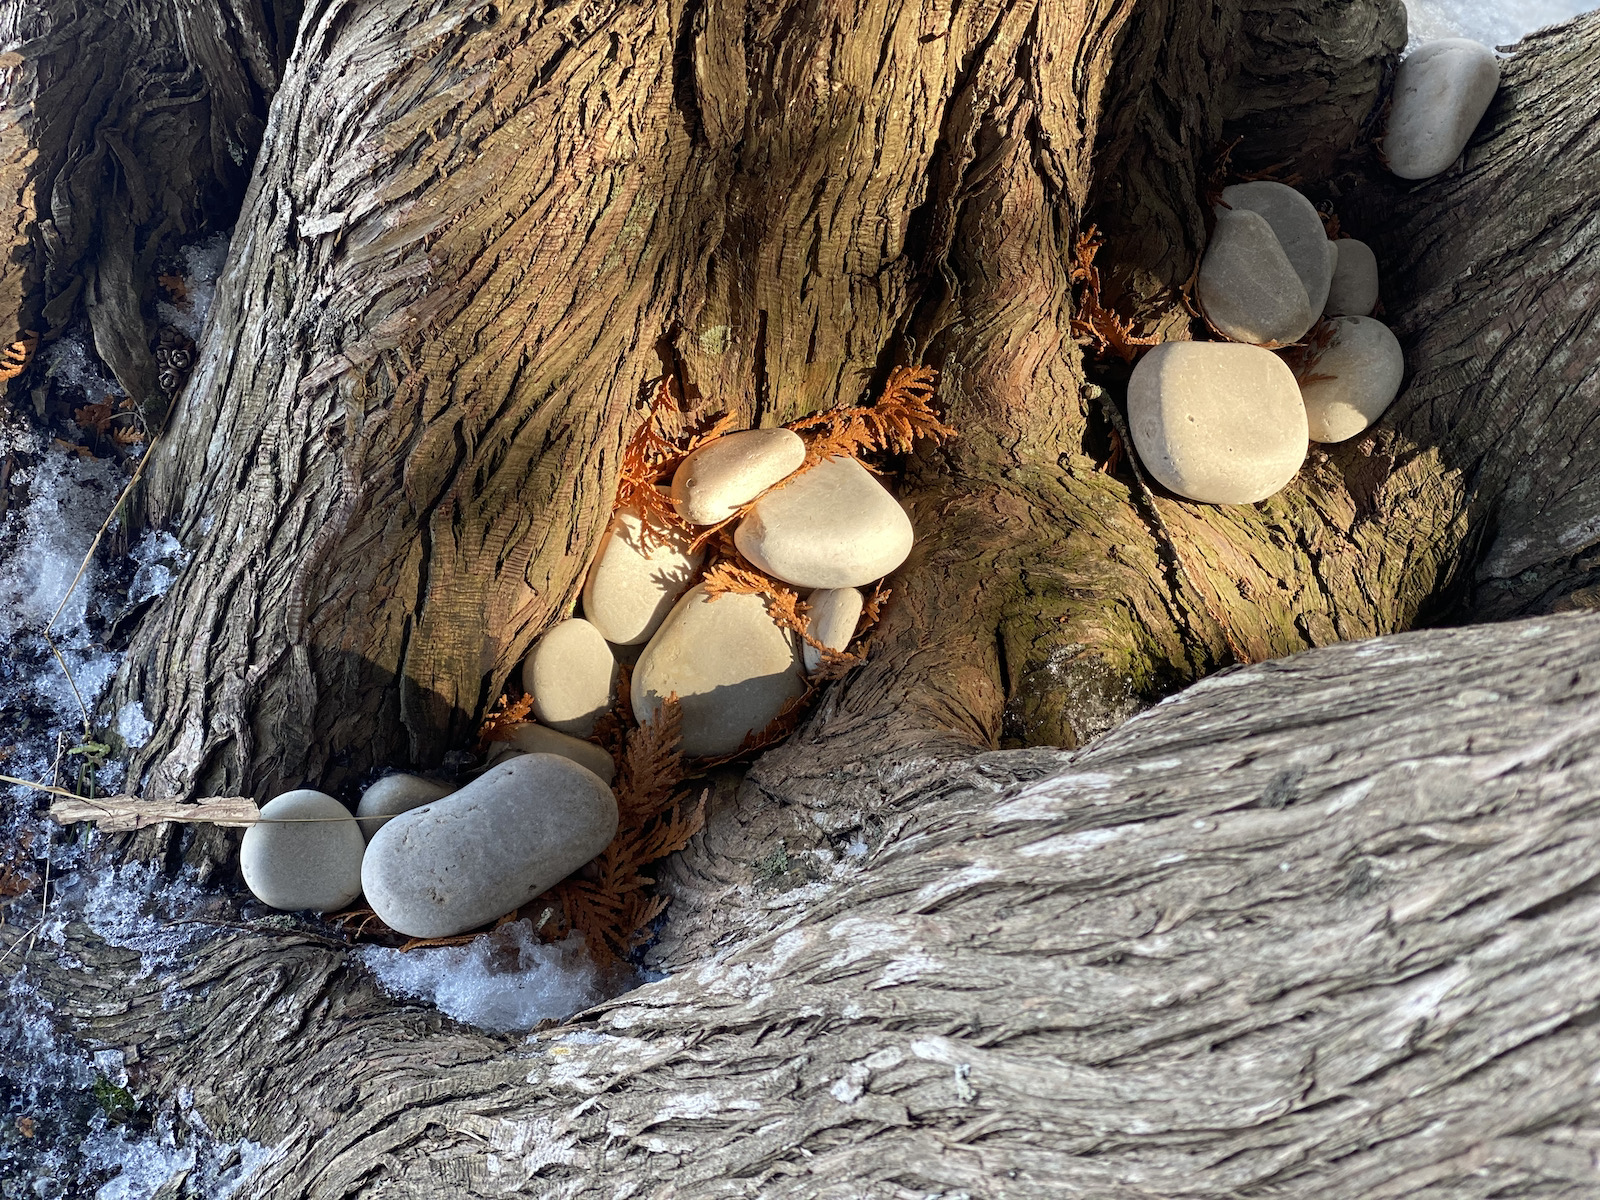 Limestone pebbles under a tree